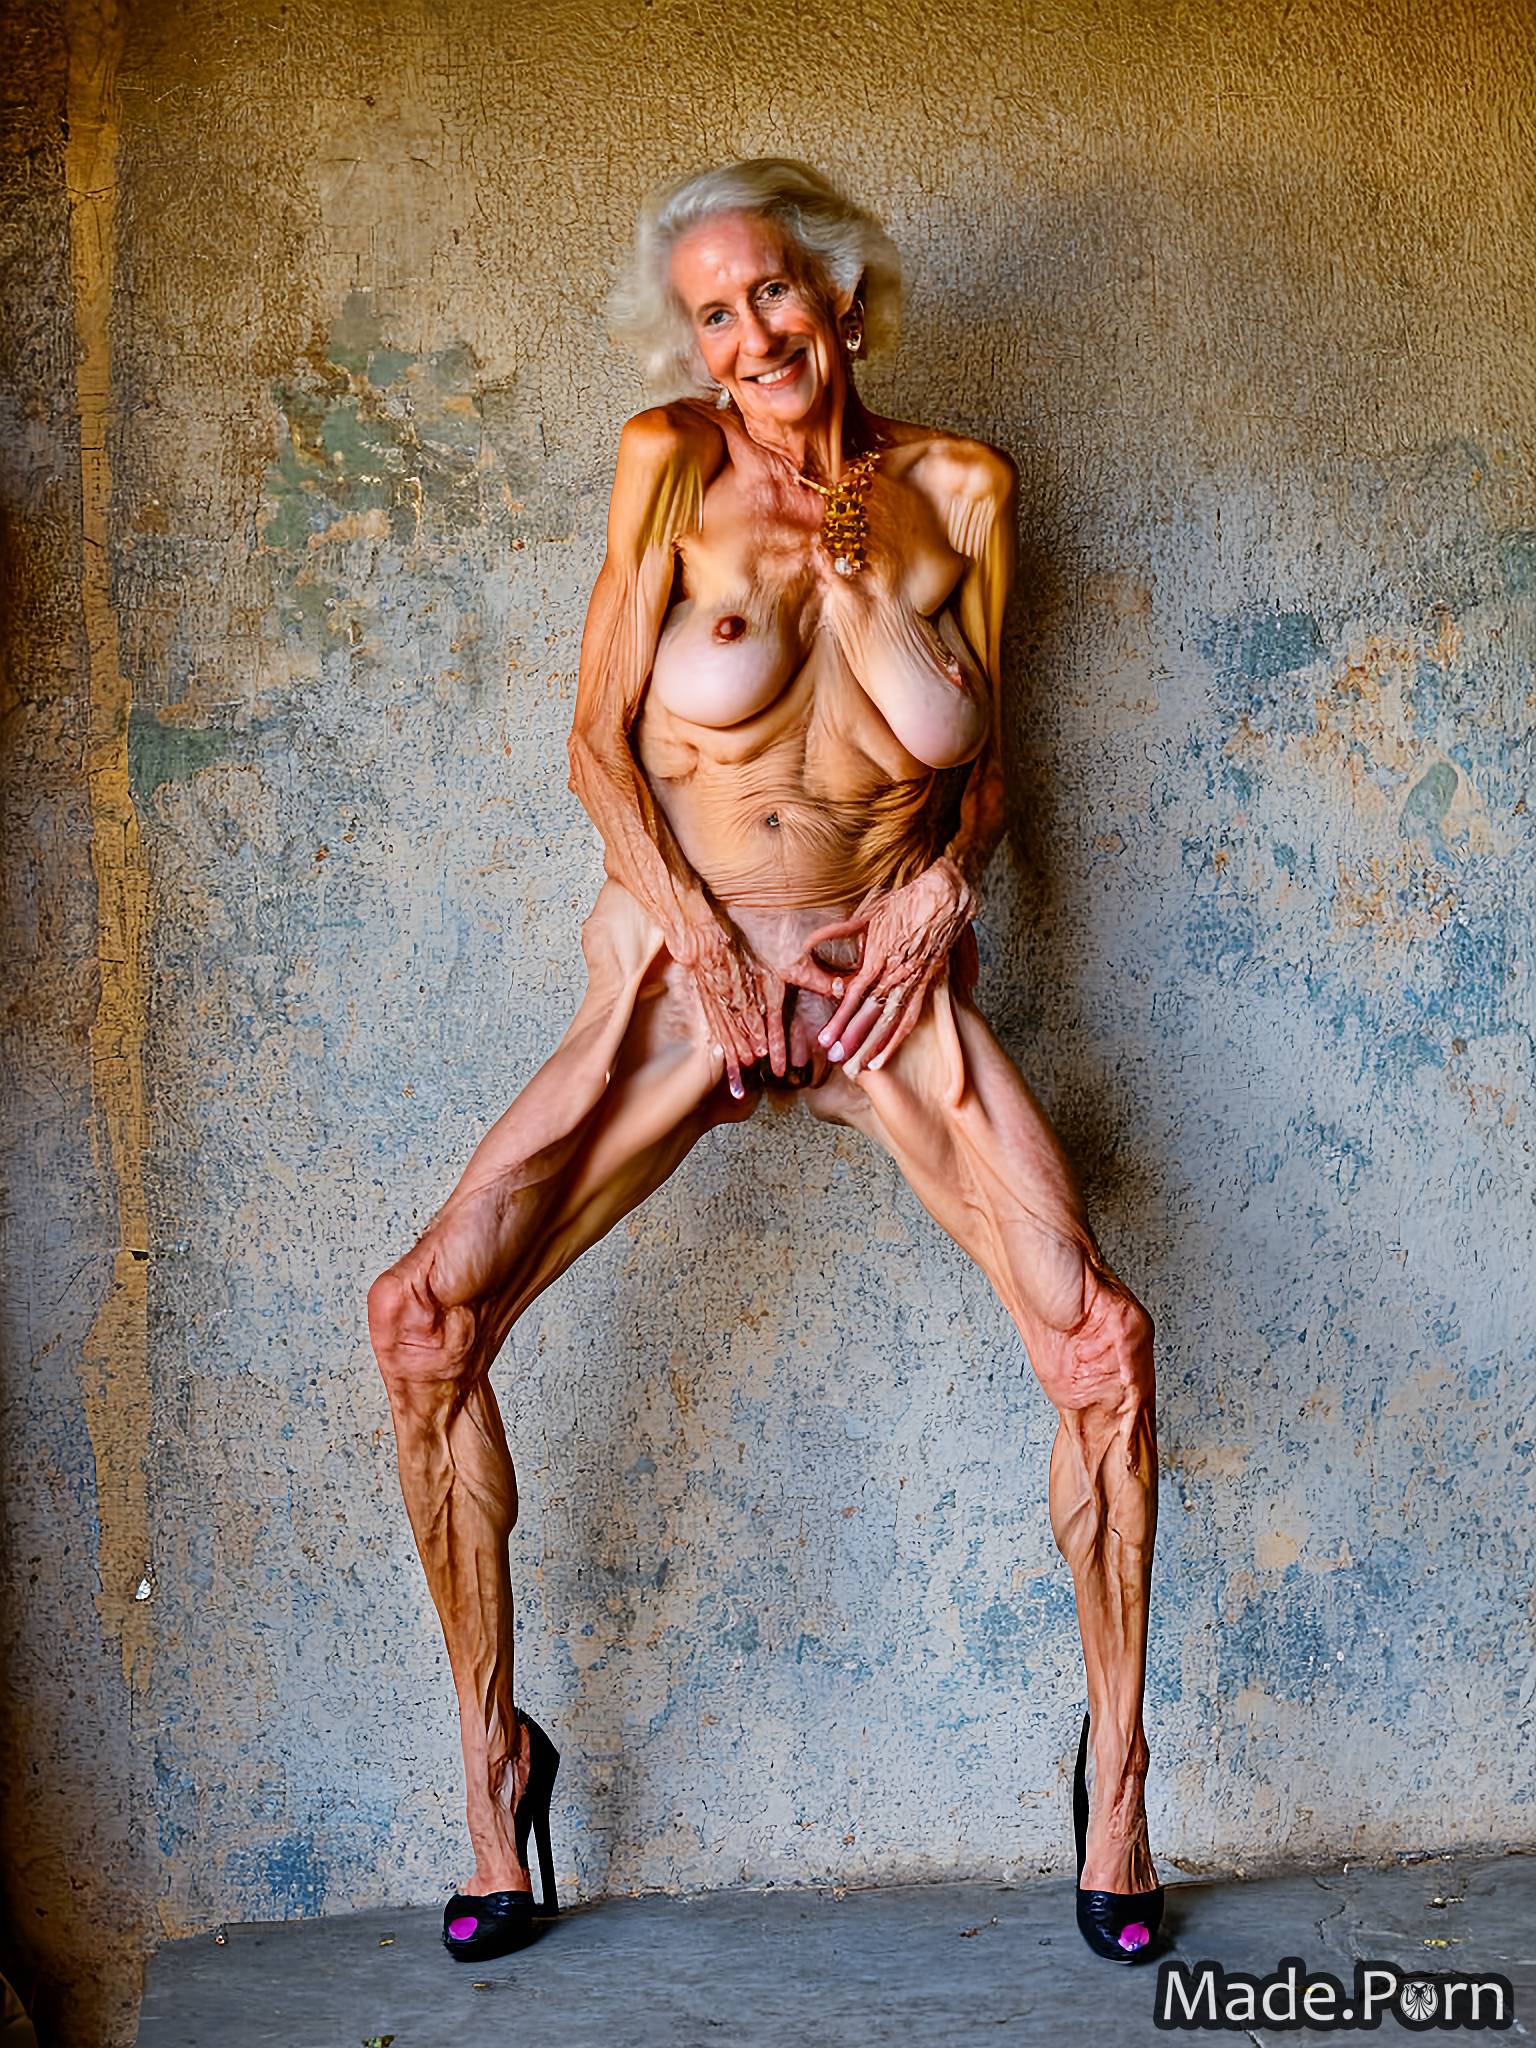 shaved 80 nude berber spreading legs photo happy skinny